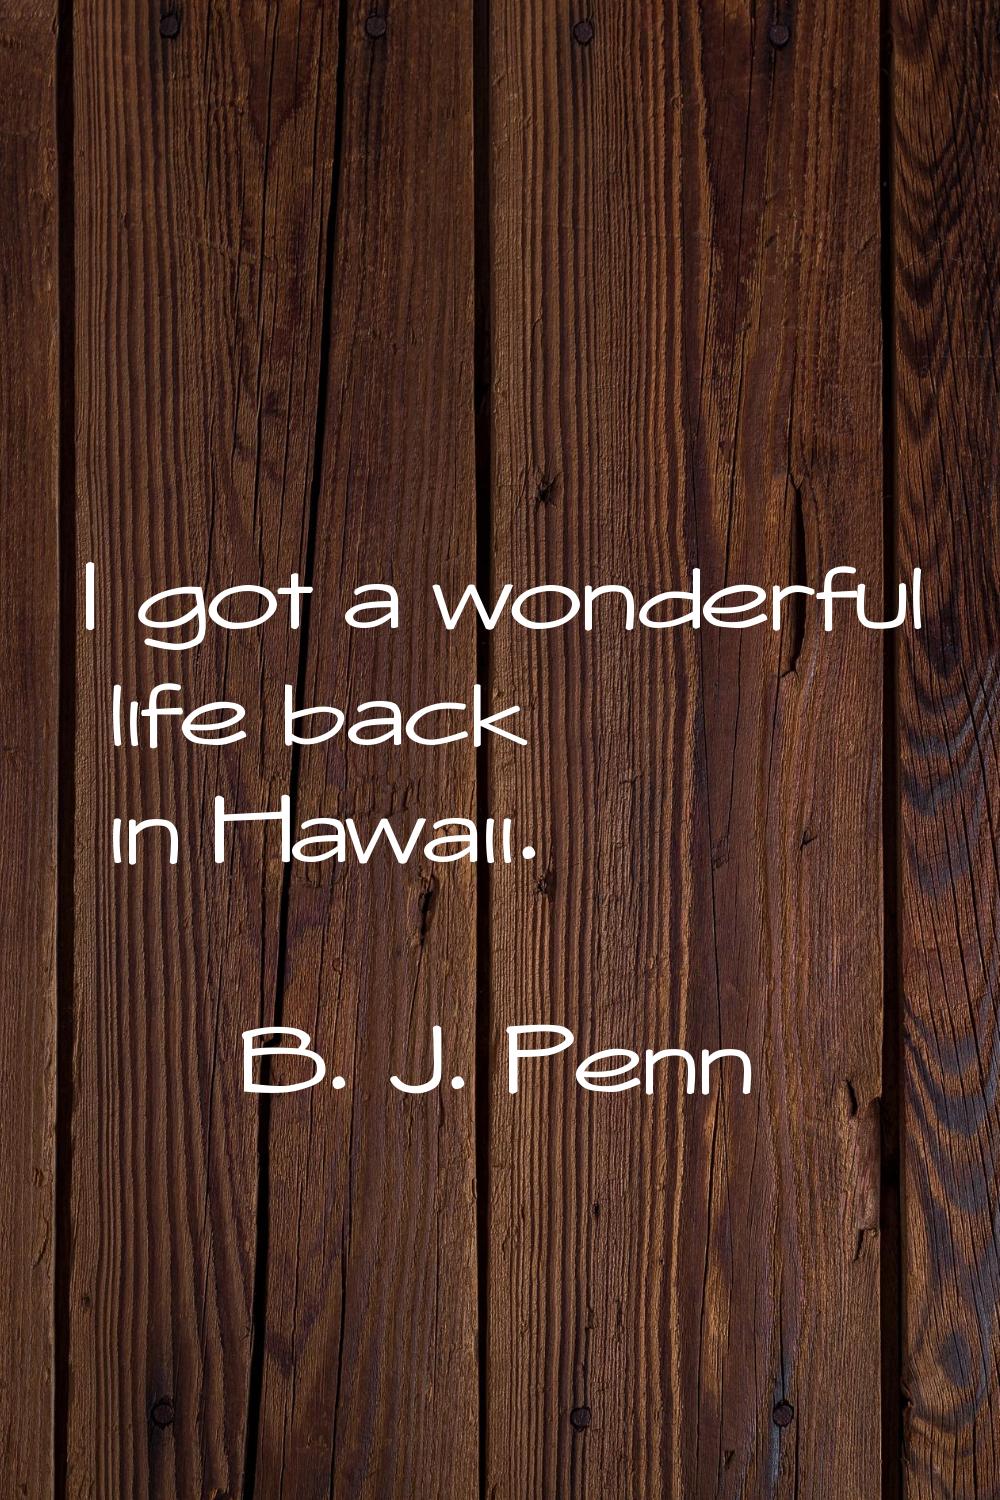 I got a wonderful life back in Hawaii.